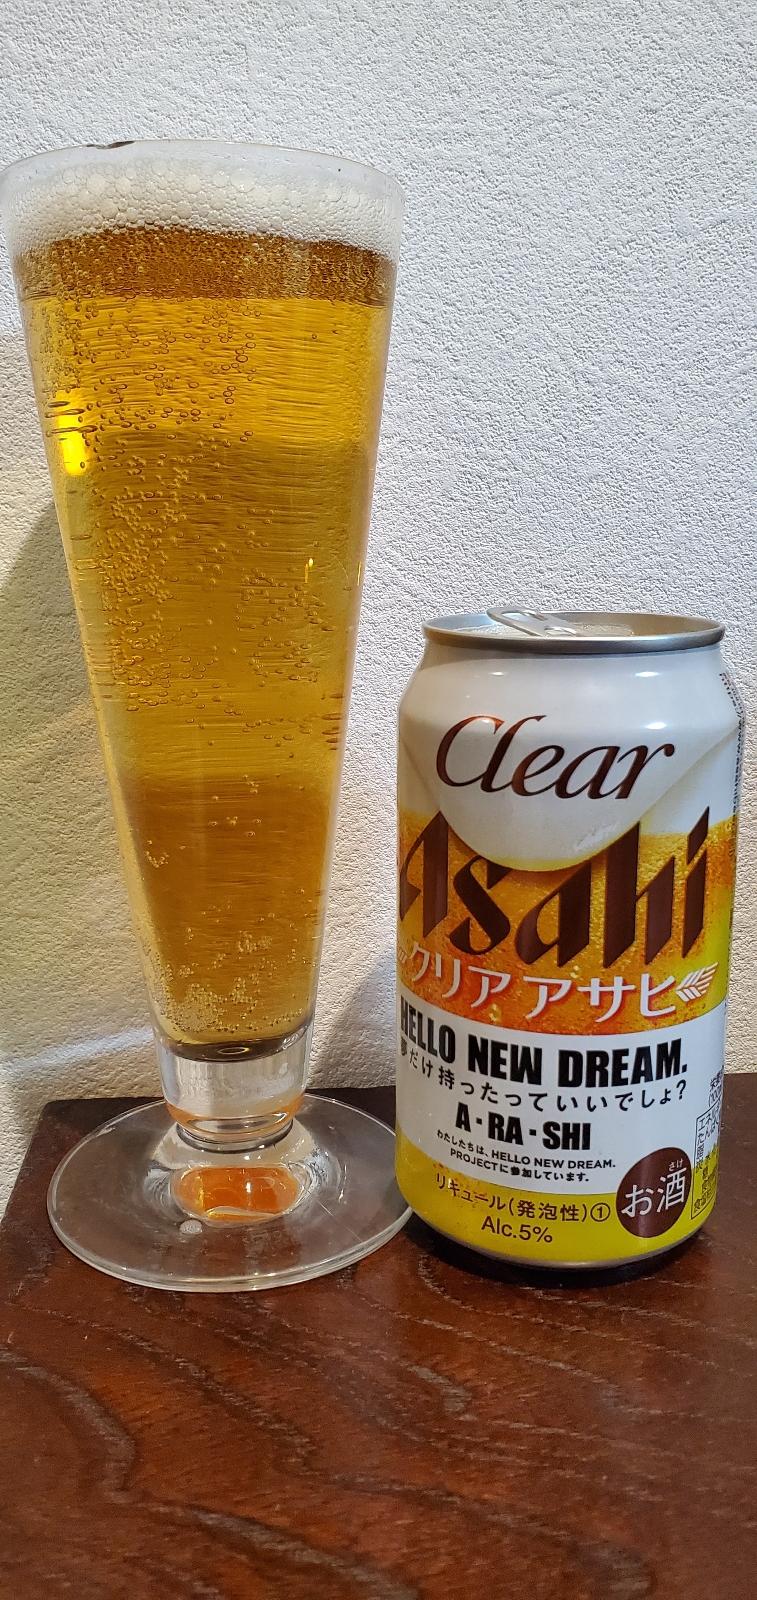 Asahi Clear Arashi (Hello New Dream)